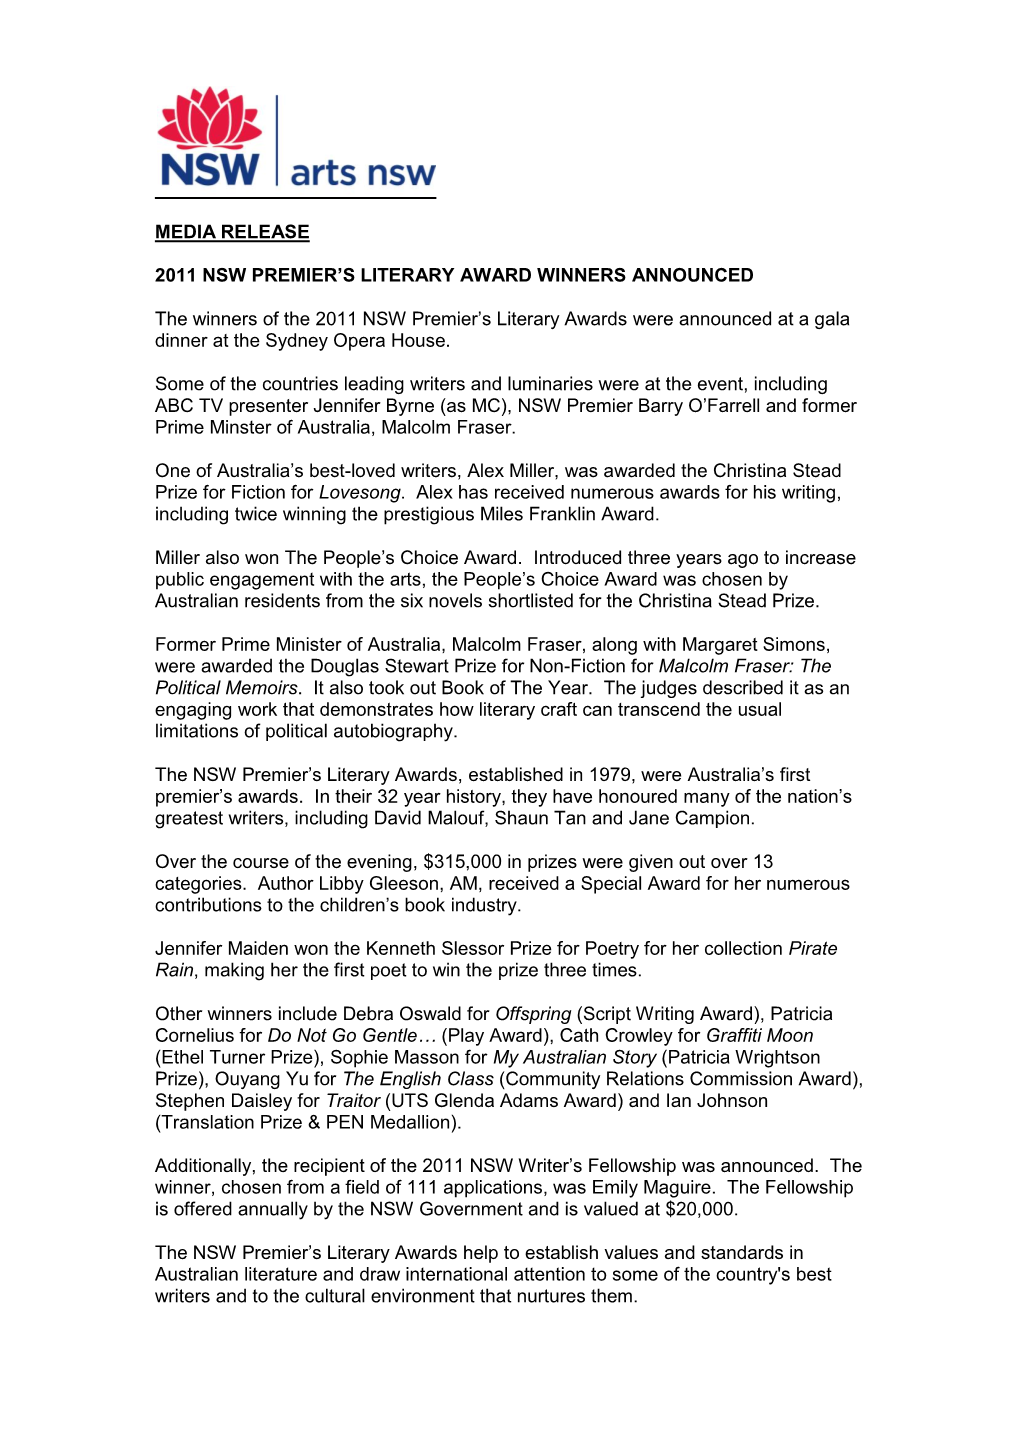 MEDIA RELEASE 2011 NSW PREMIER's LITERARY AWARD WINNERS ANNOUNCED the Winners of the 2011 NSW Premier's Literary Awards